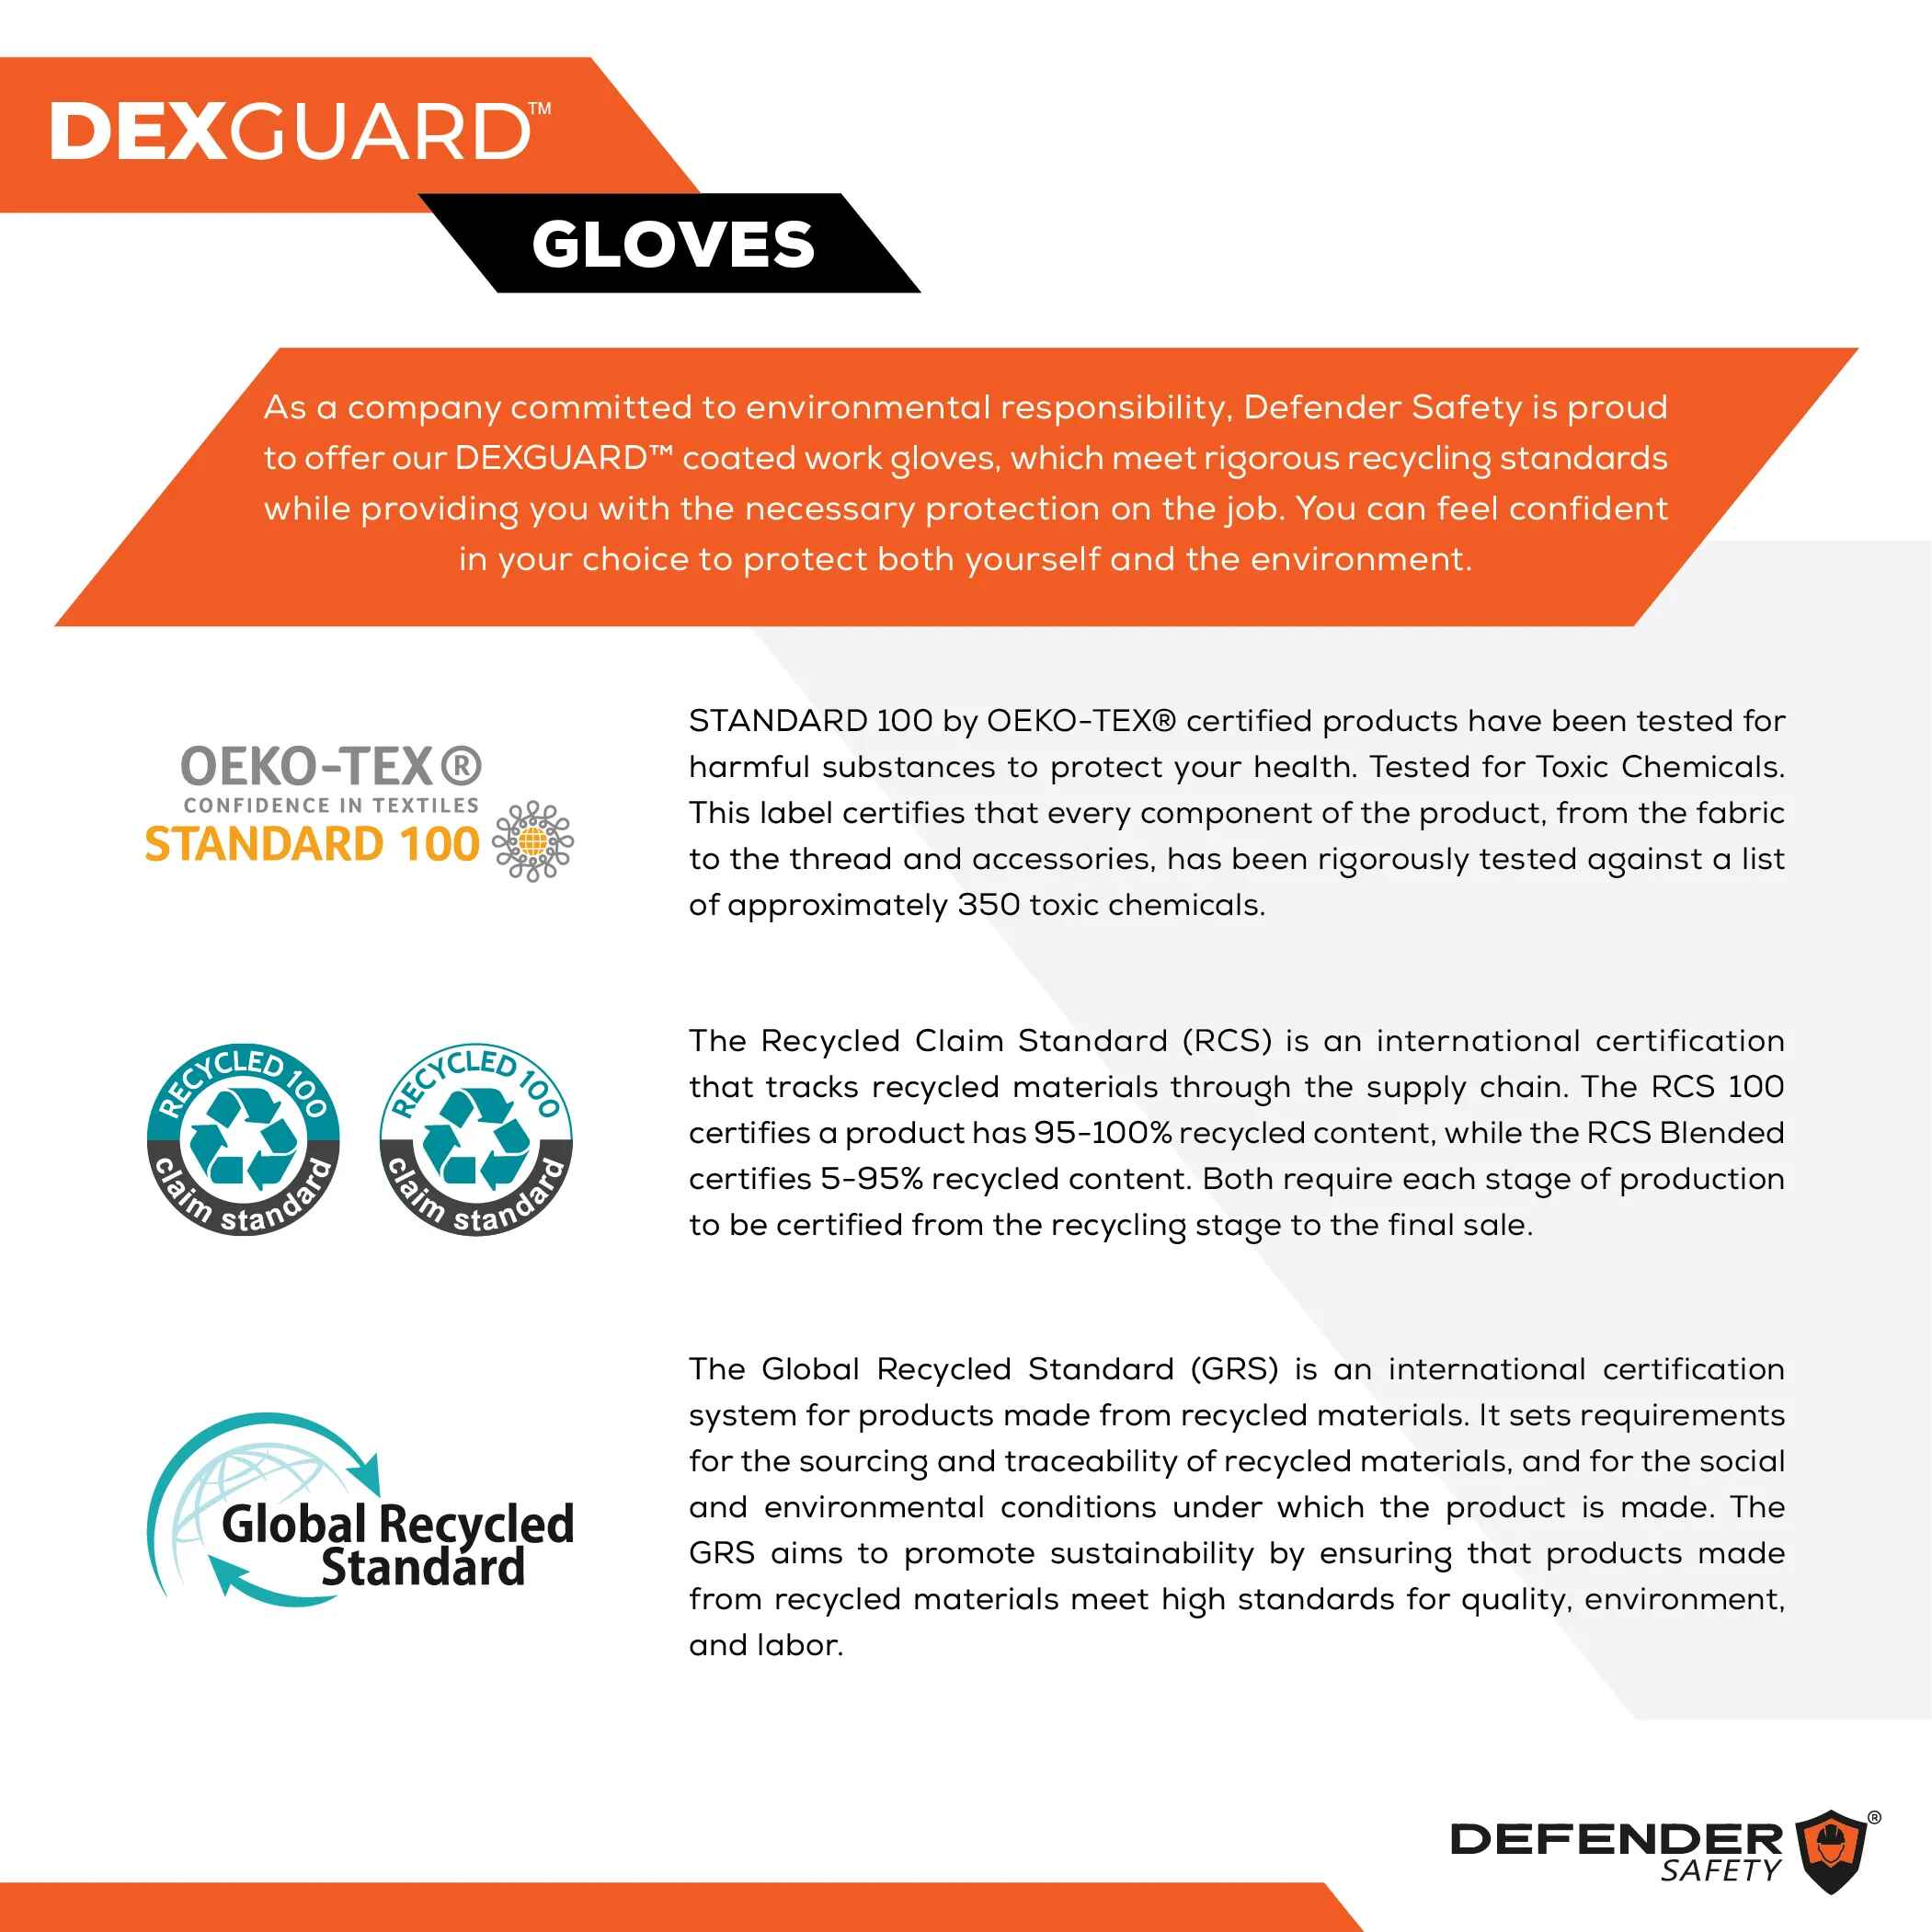 DEXGUARD™ A2 Cut Glove, Level 4 Abrasion Resistant, Polyurethane Coated - Defender Safety